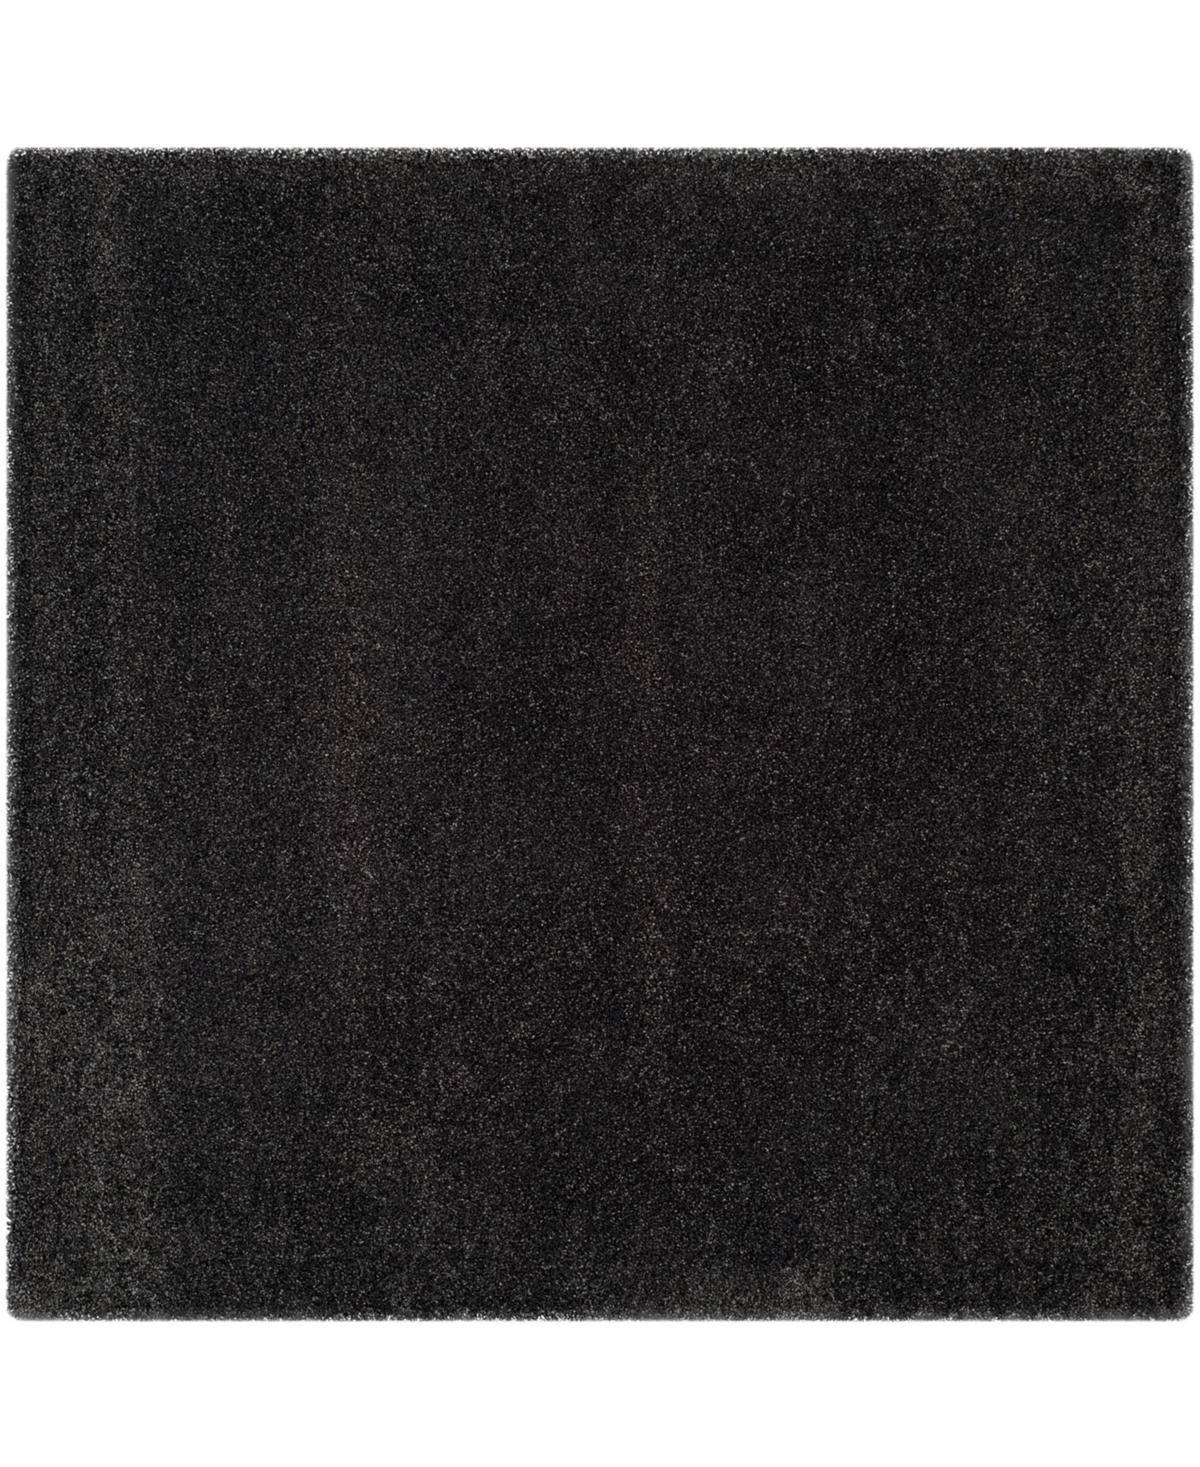 Safavieh Shag 10' x 10' Square Area Rug - Dark Gray